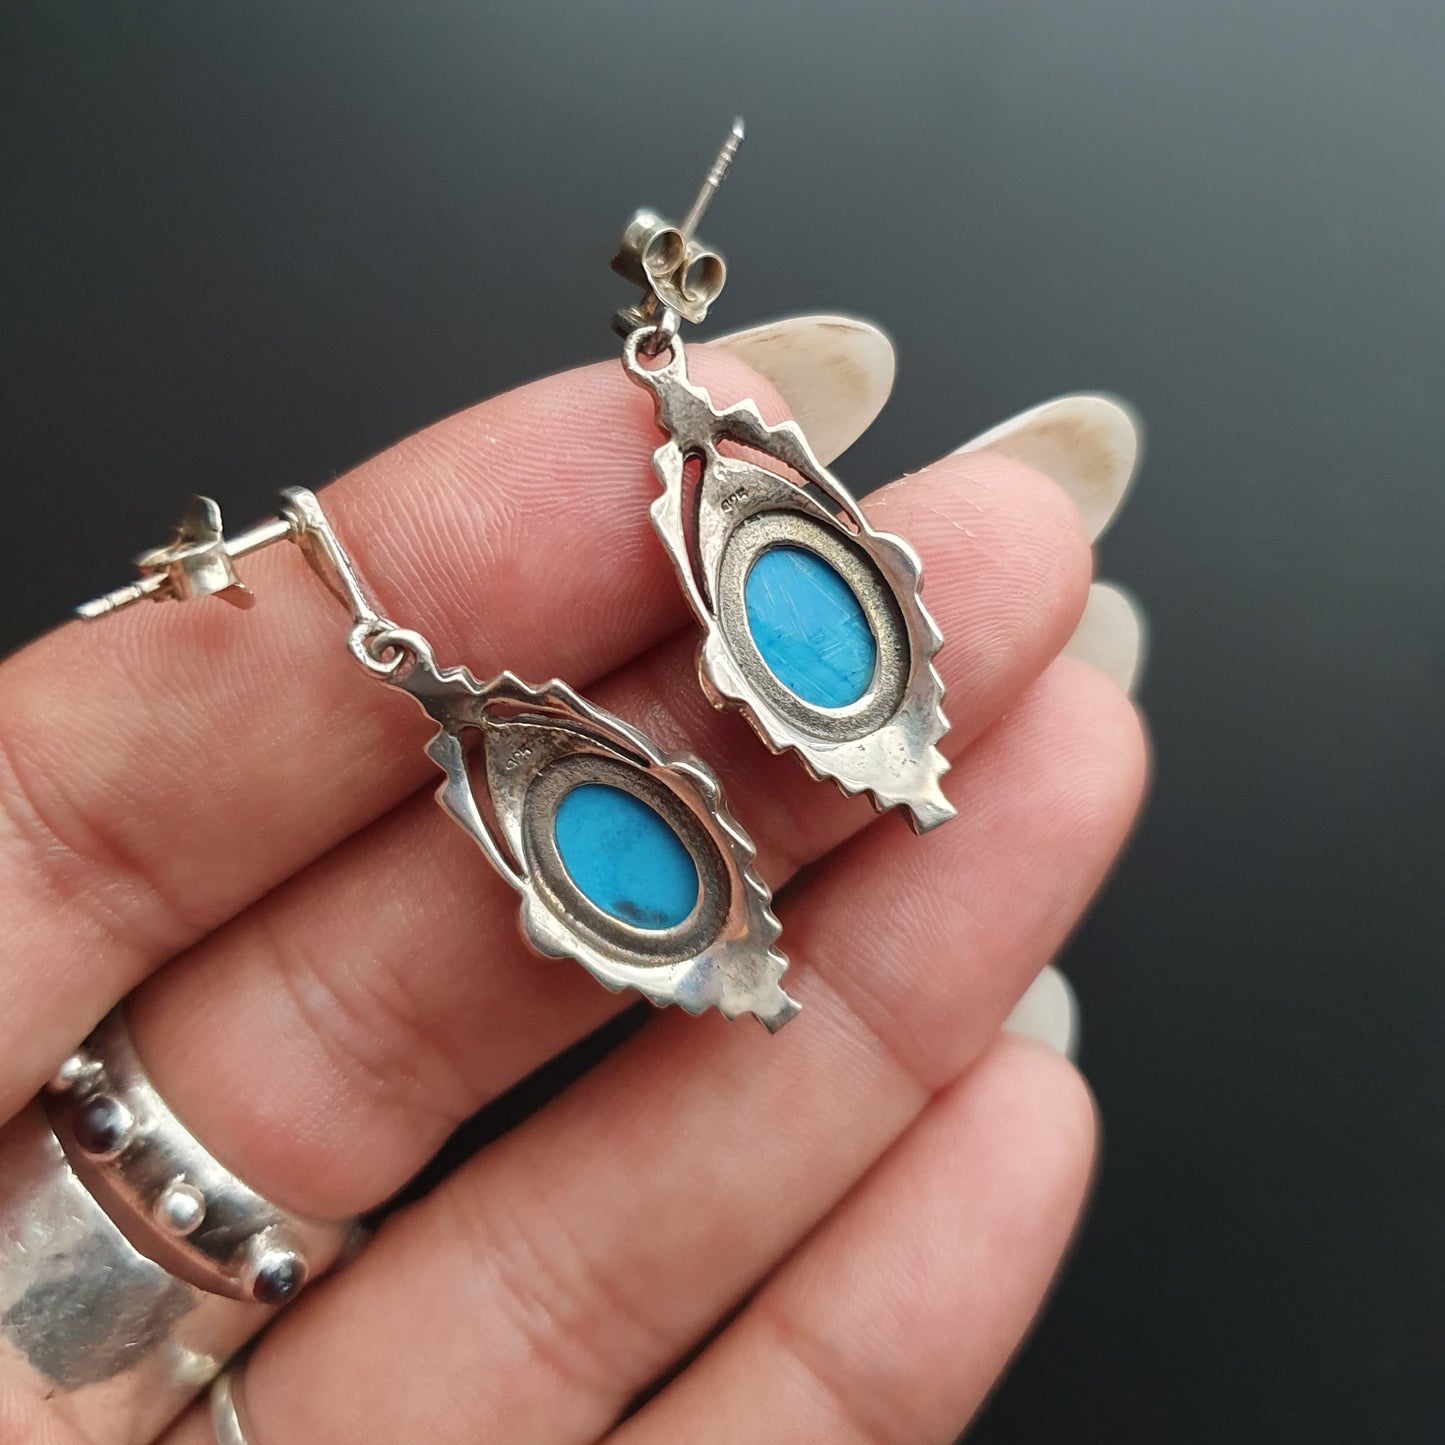 Silver earrings, Victorian earrings, vintage earrings, antique earrings, turquoise earrings, sterling silver earrings, statement earrings